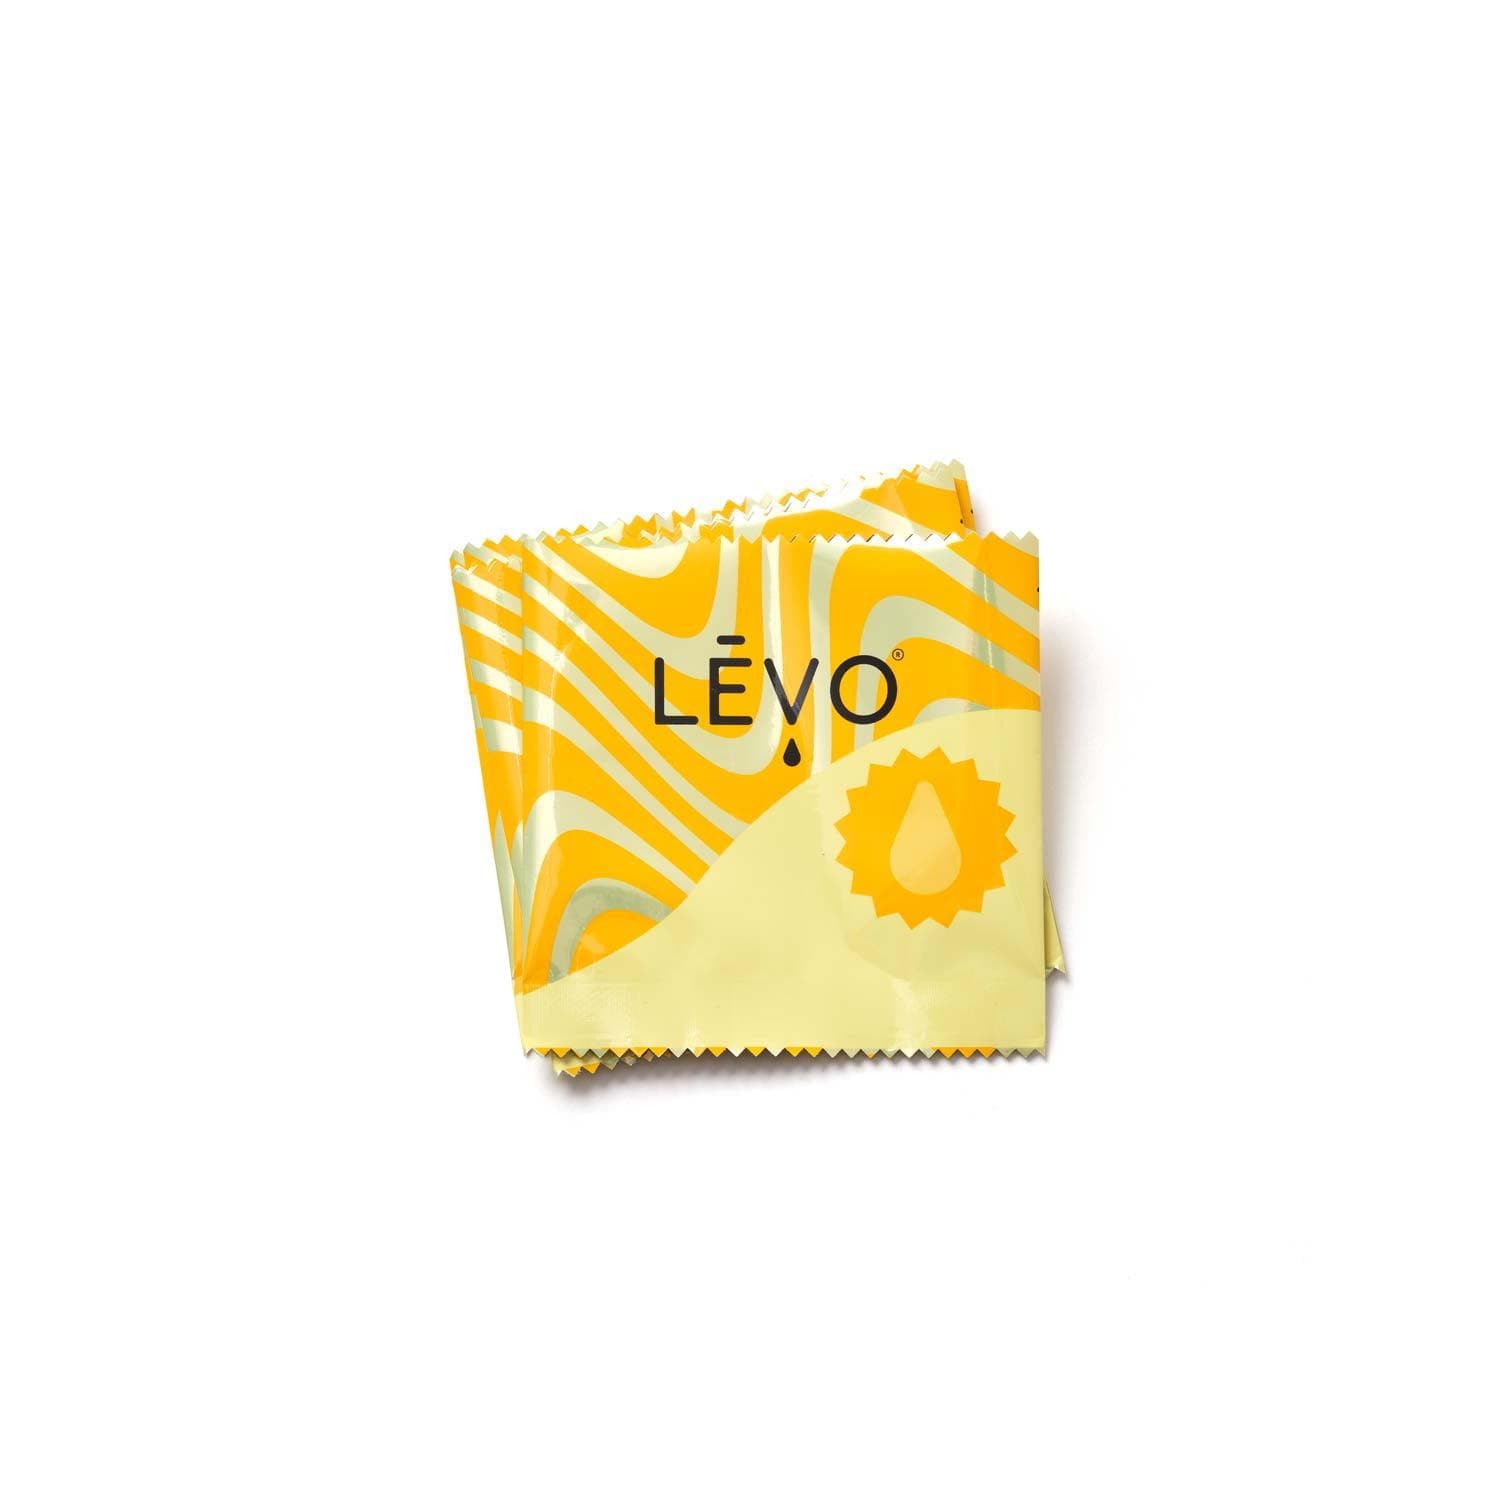 LEVO oil wrap refills in gold